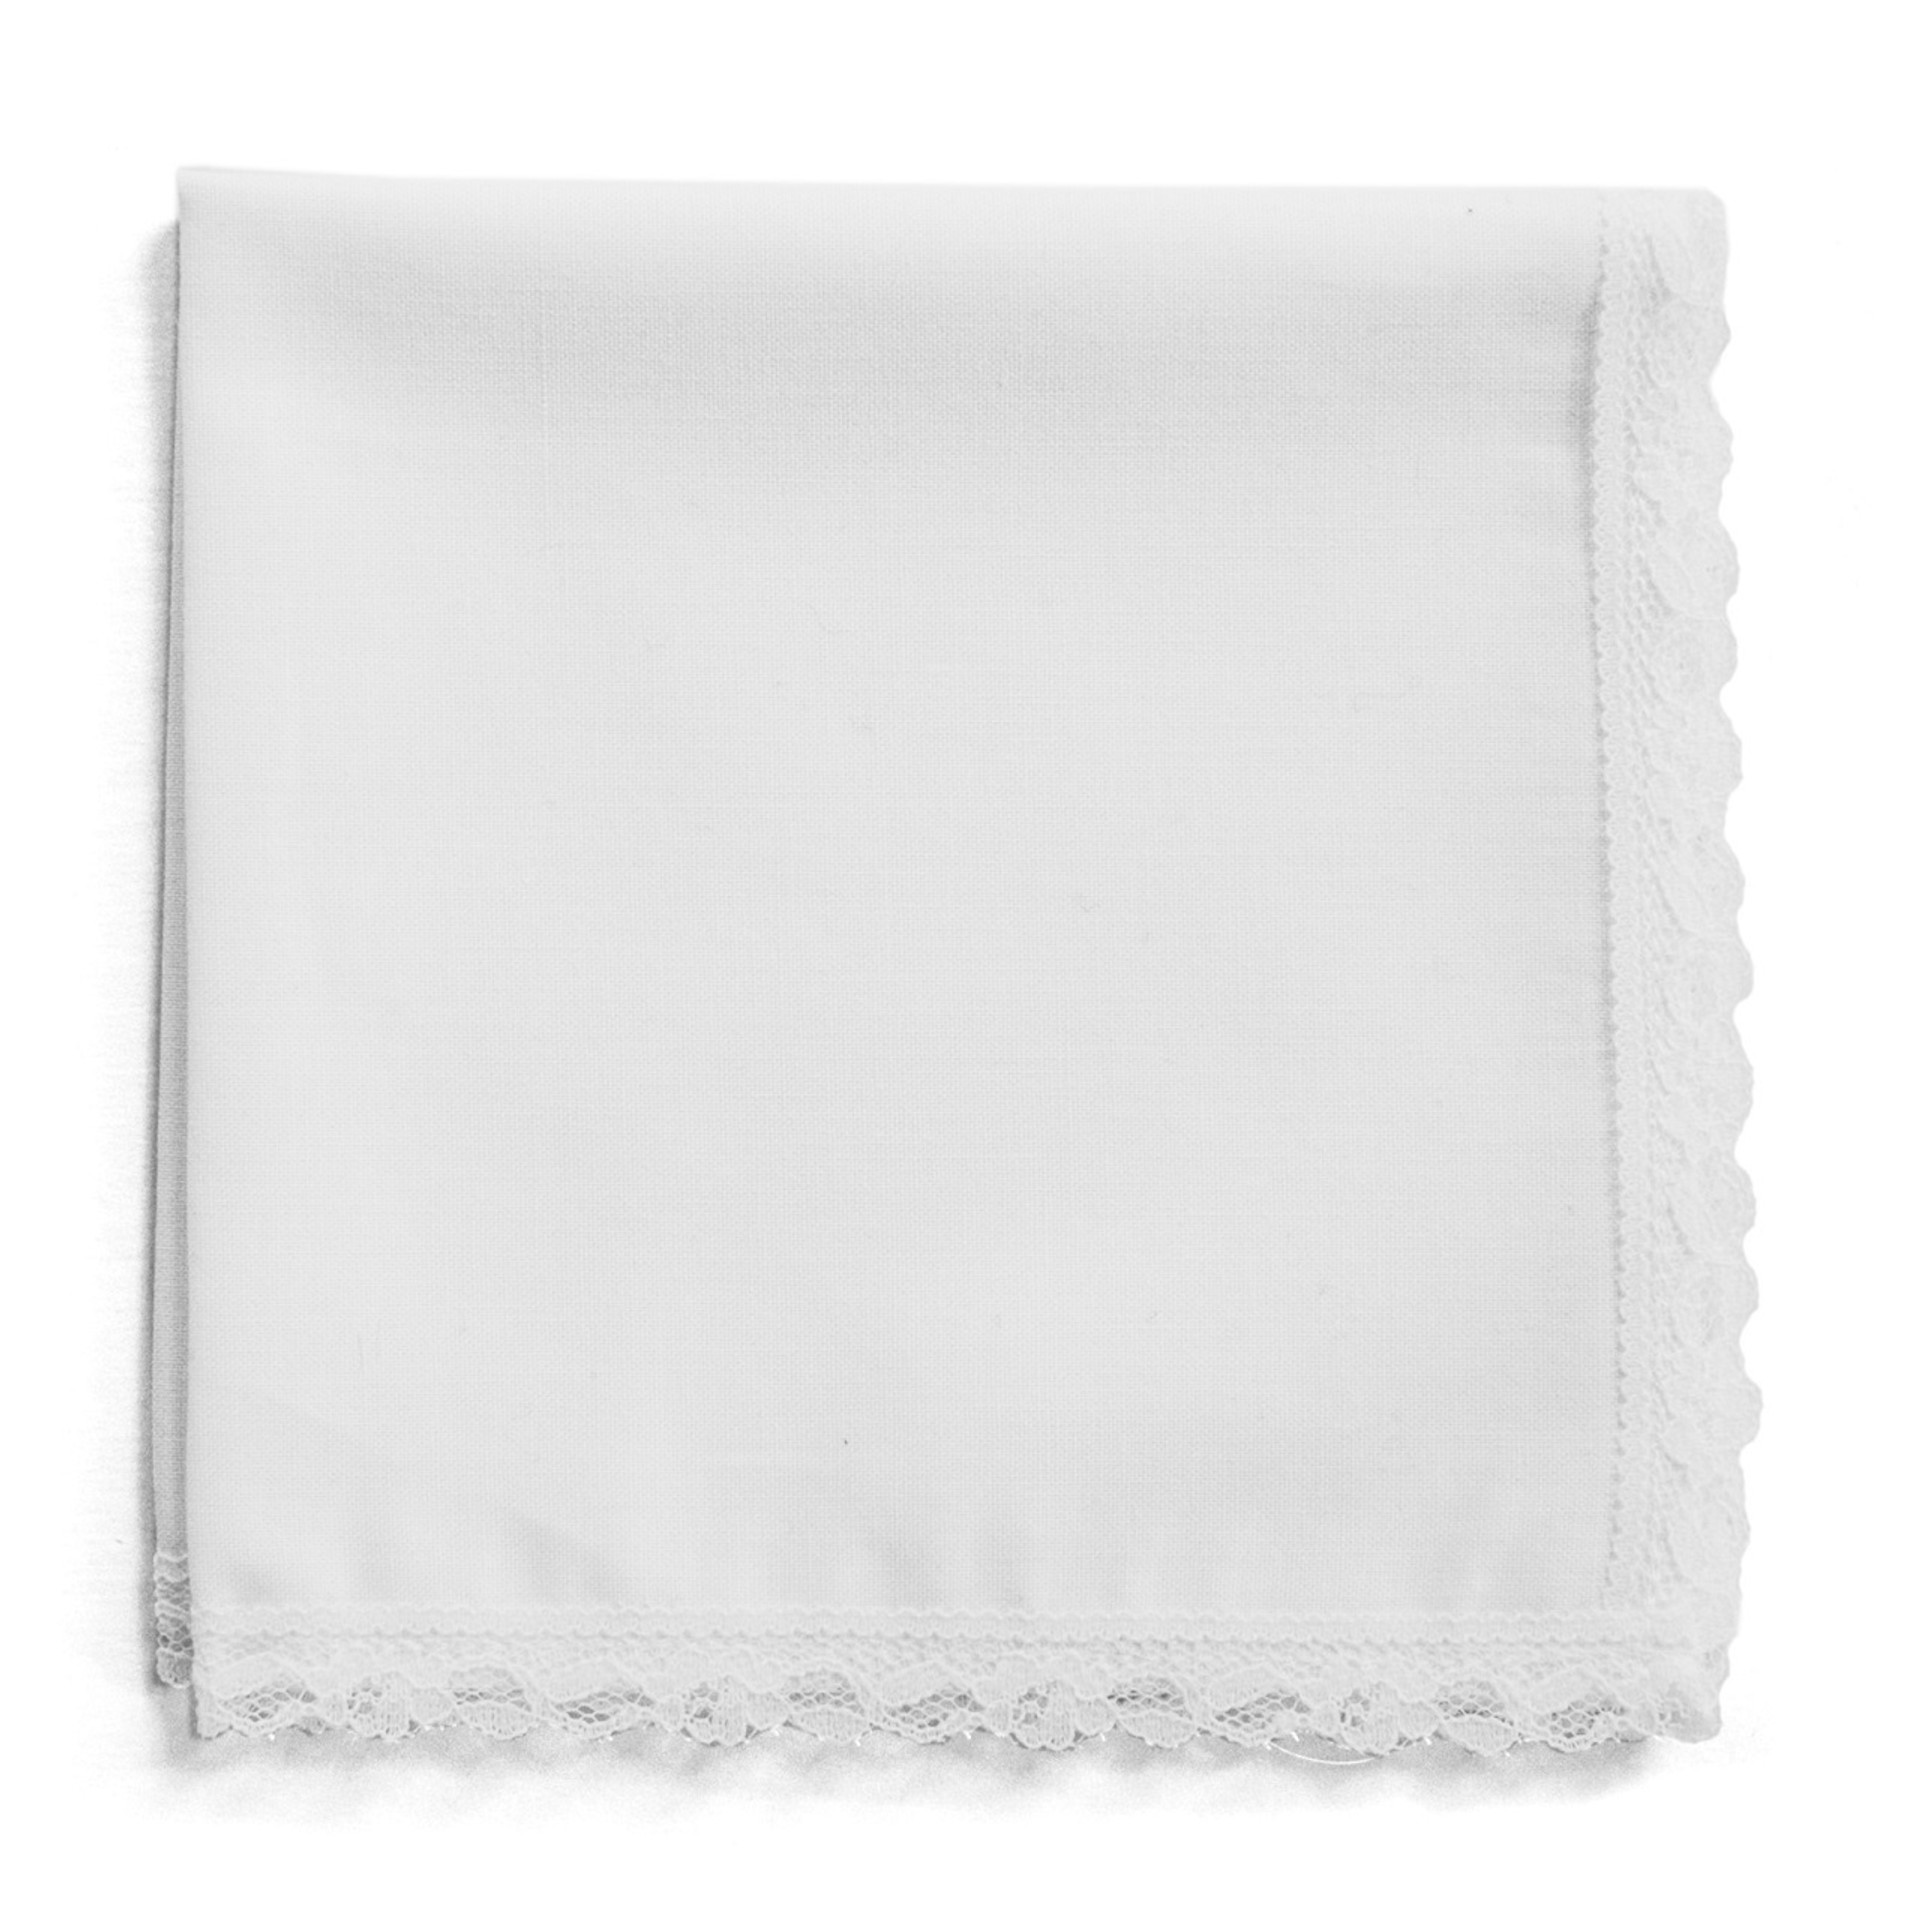 Gold Polka Dot Wedding Handkerchief | The Handkerchief Shop